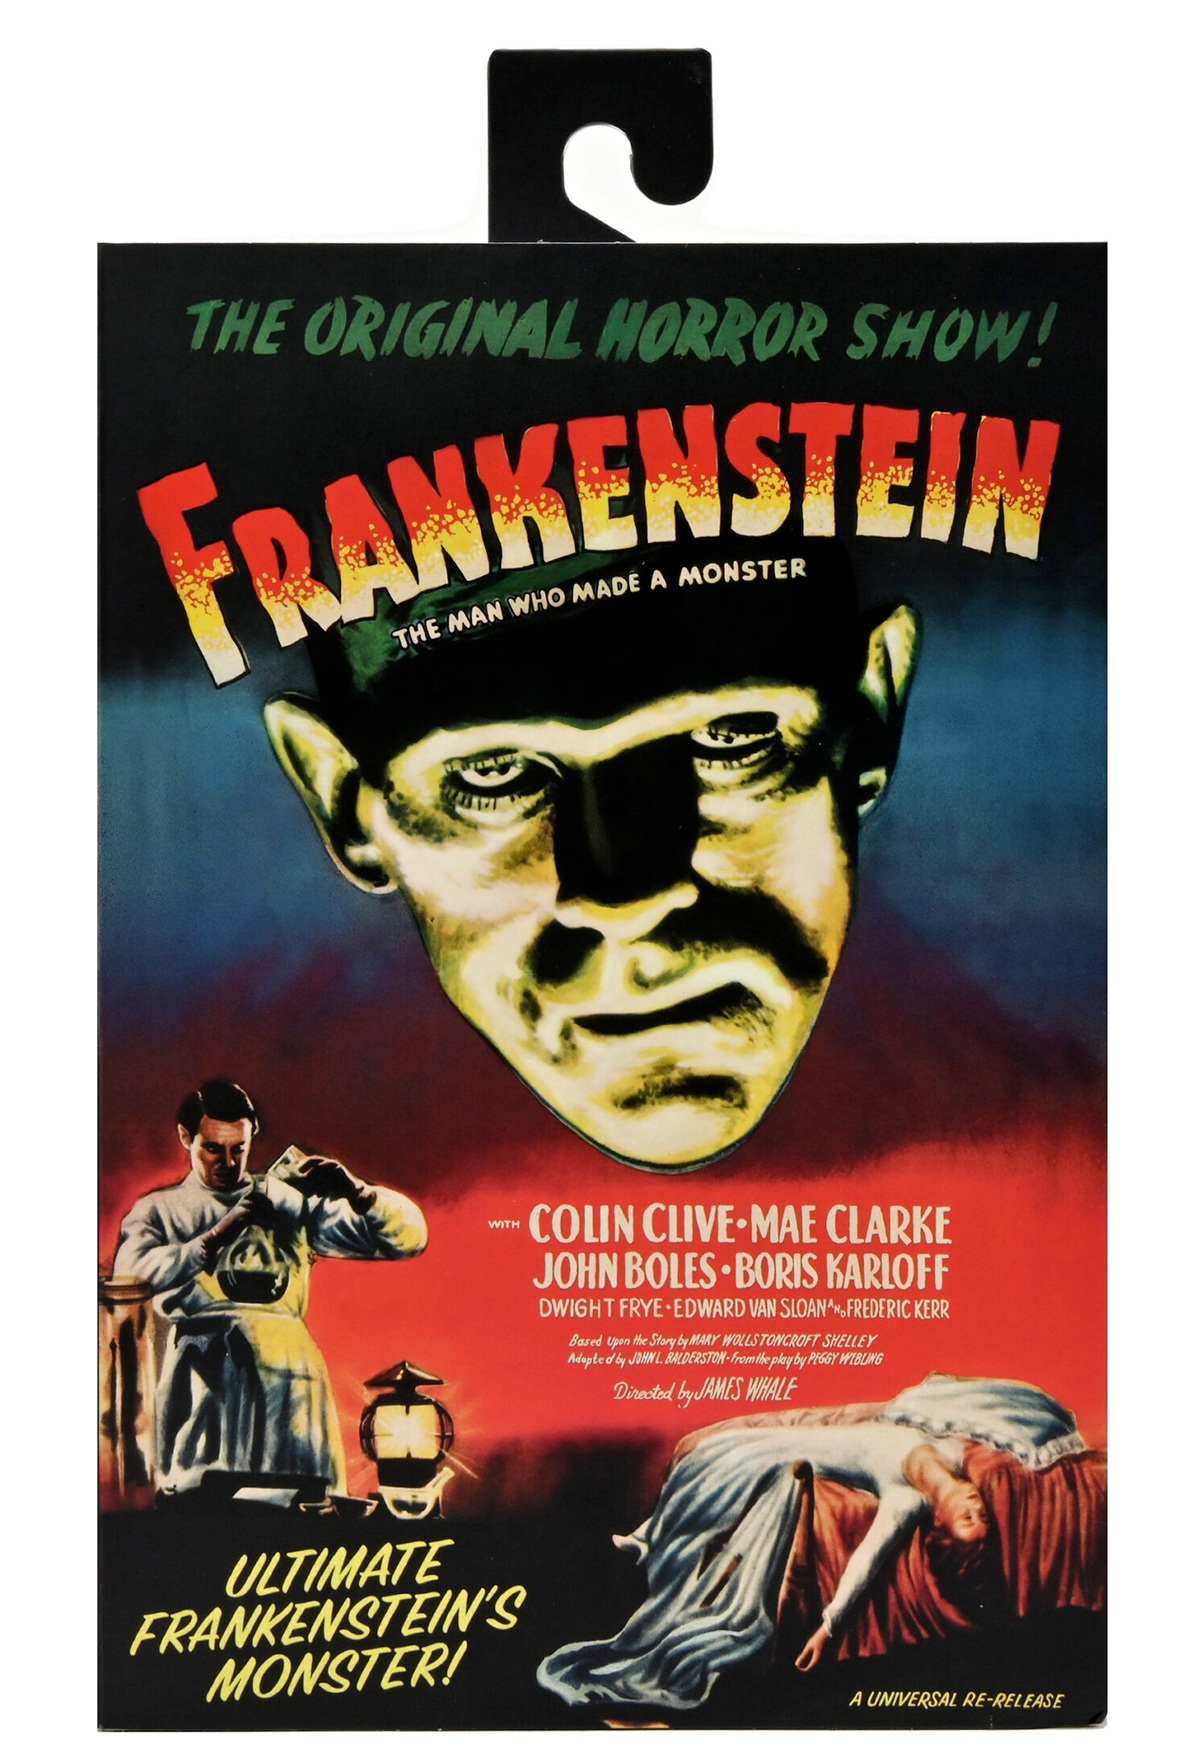 Ultimate Frankenstein Full Color Universal Monsters